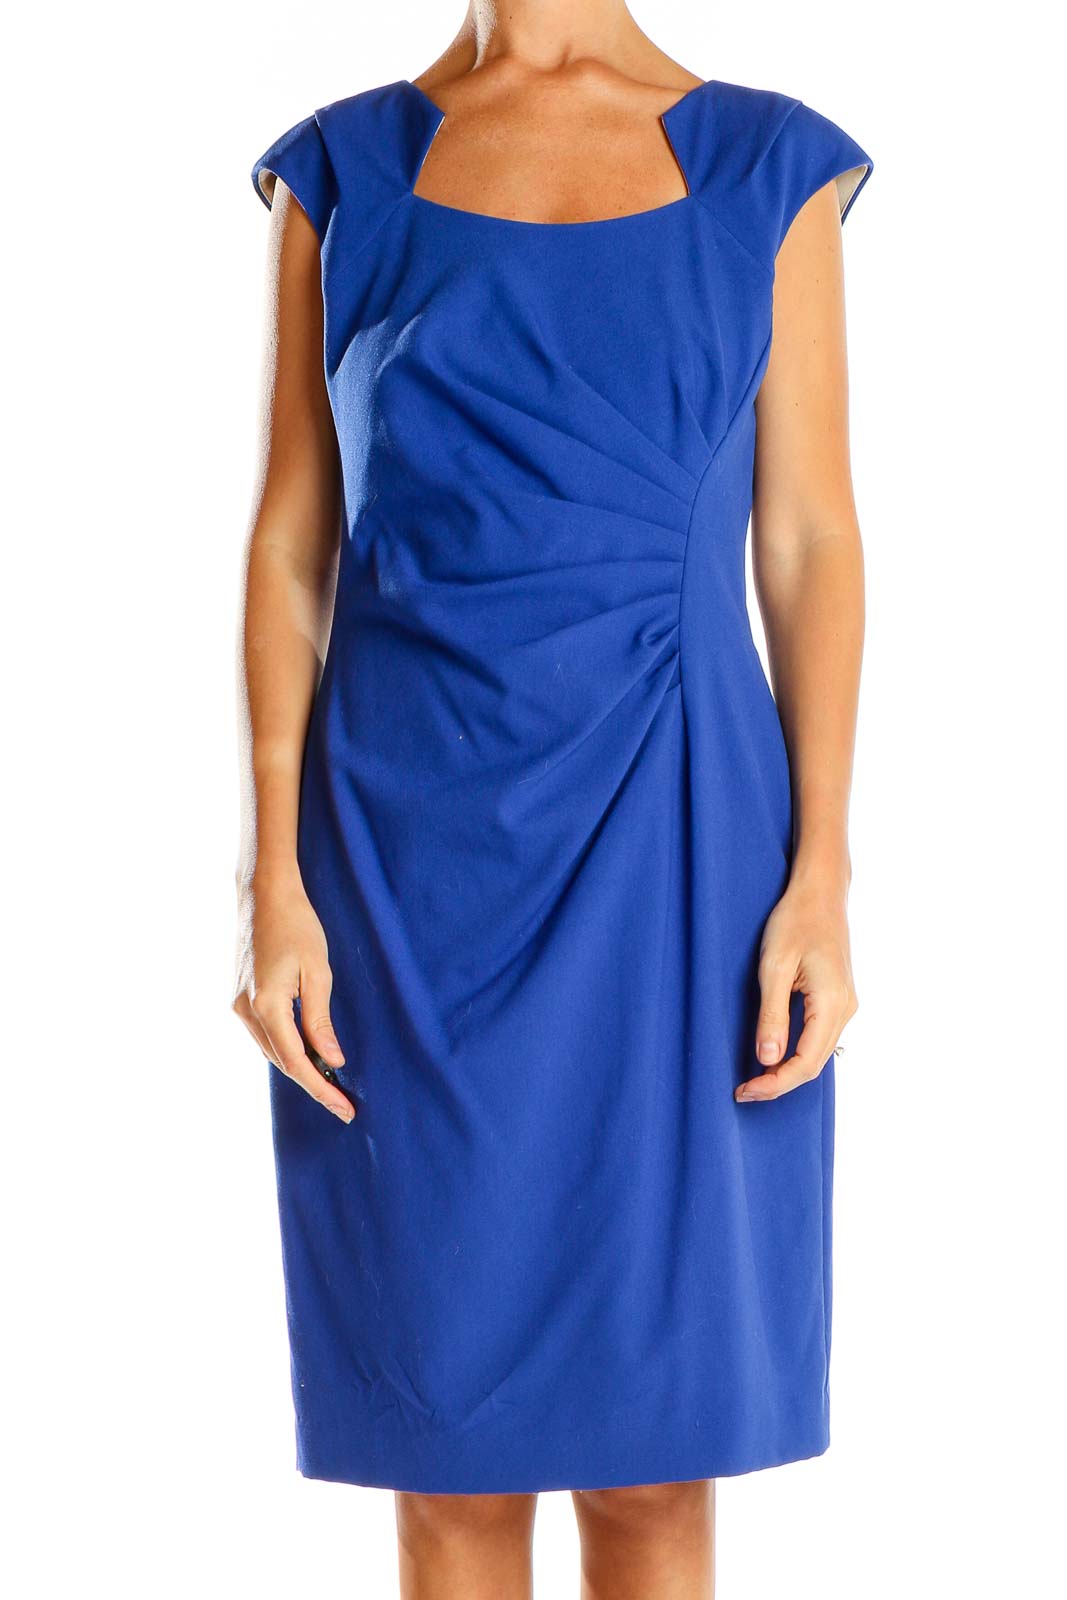 Calvin Klein - Blue Classic Sheath Dress Polyester Spandex Rayon | SilkRoll